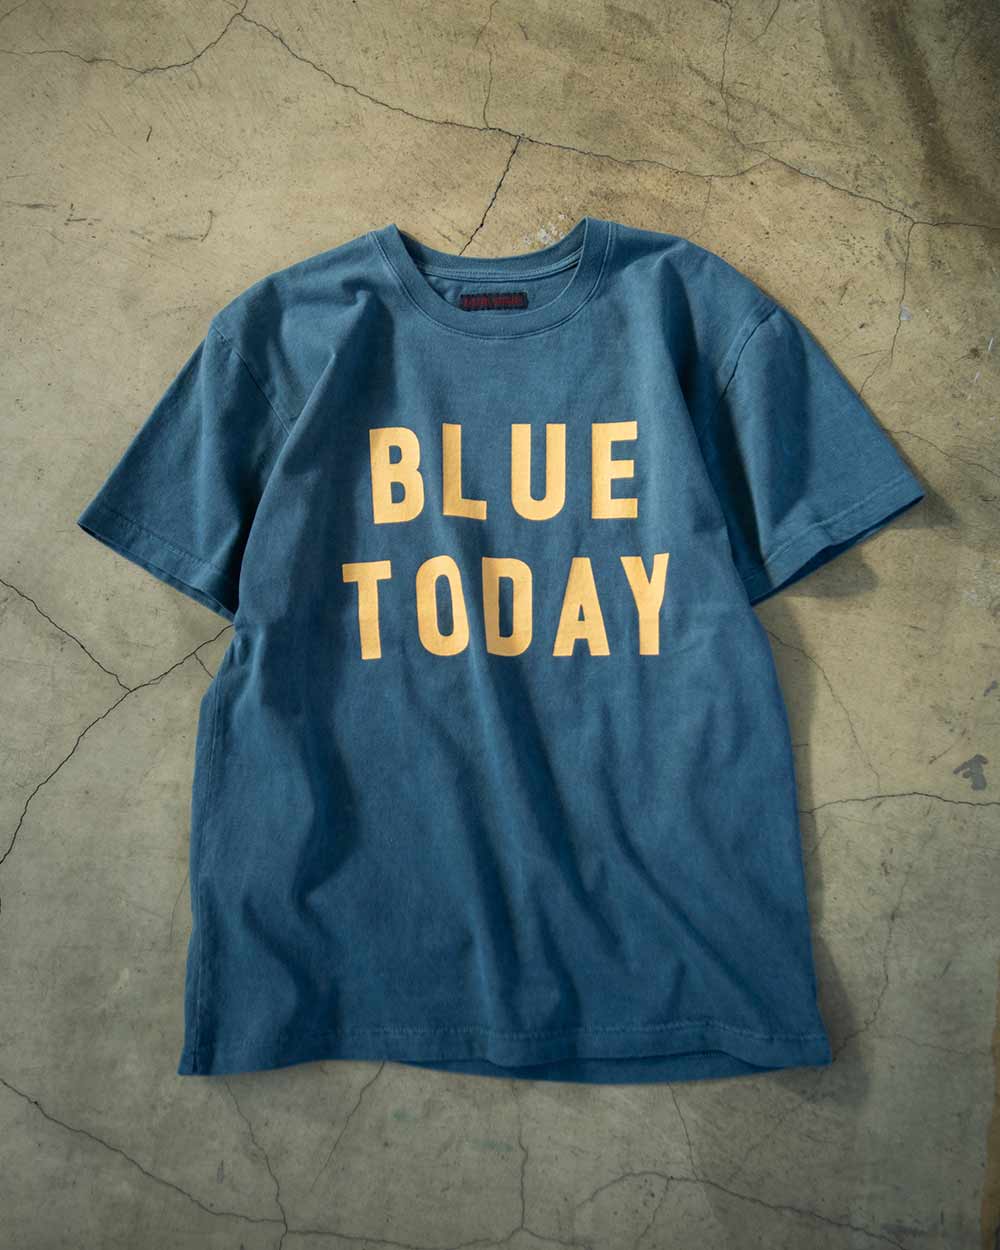 BLUE TODAY ヴィンテージ ウォッシュ Tシャツ